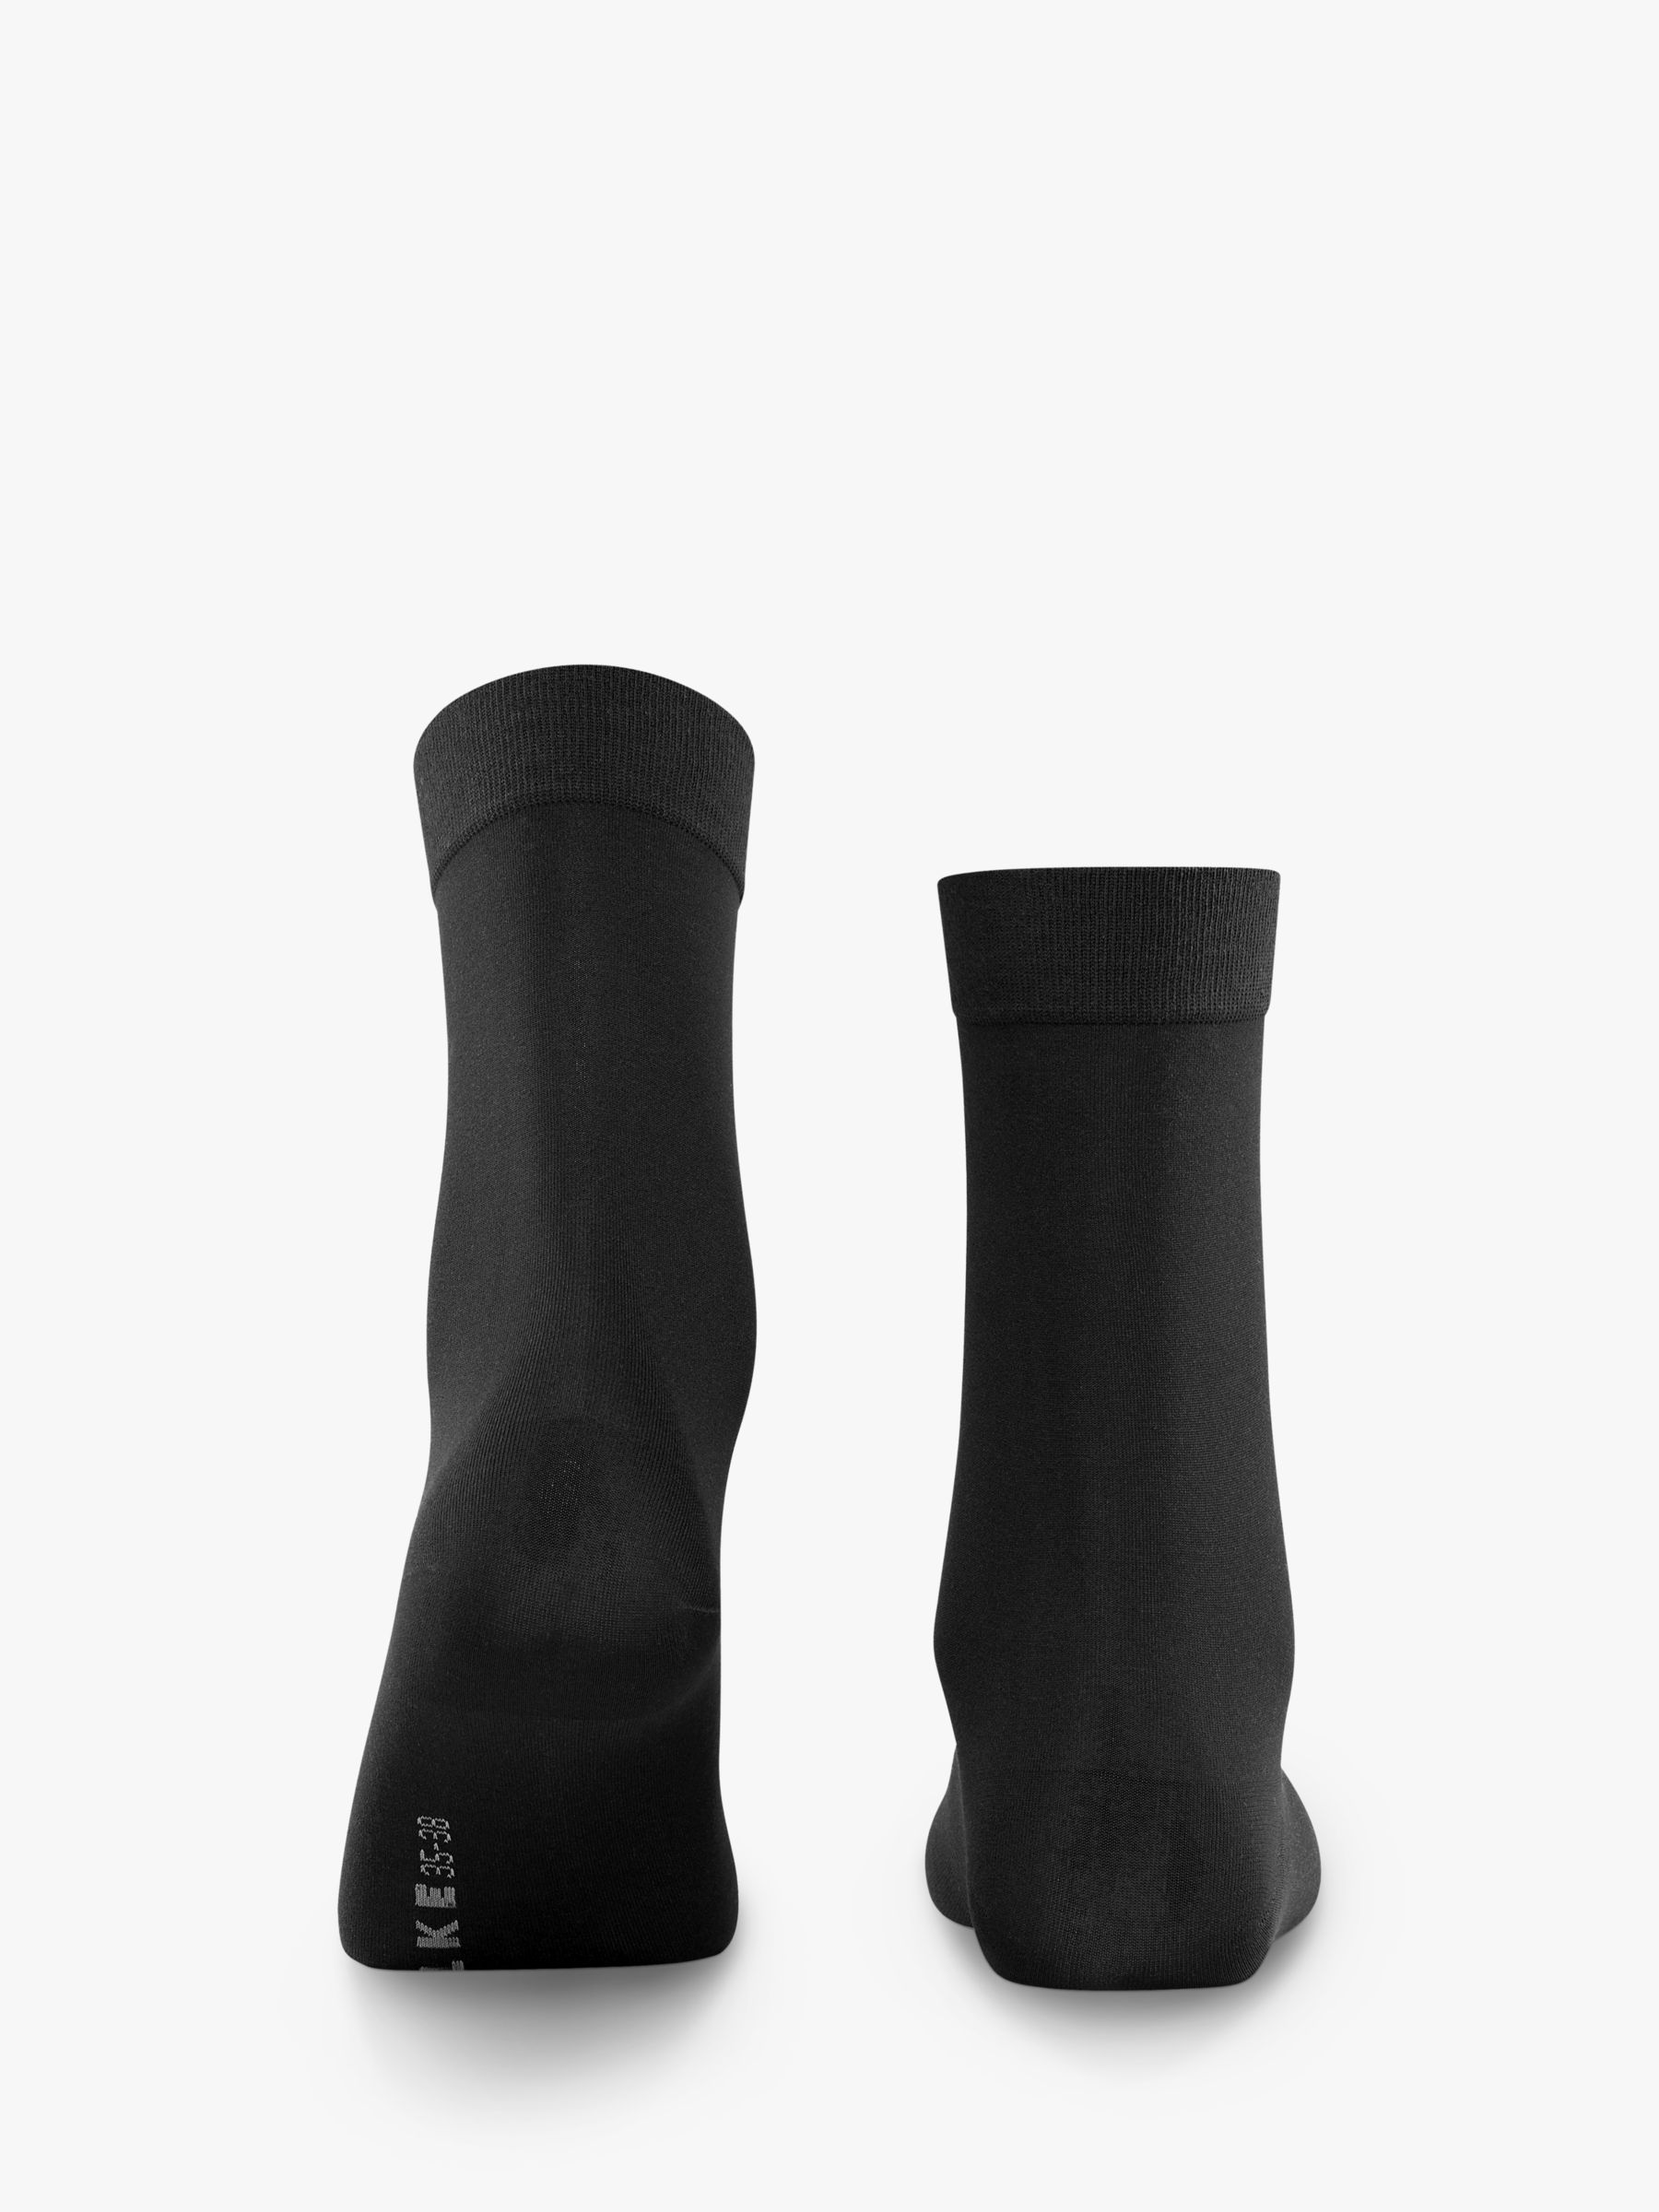 FALKE Cotton Touch Ankle Socks, Black at John Lewis & Partners